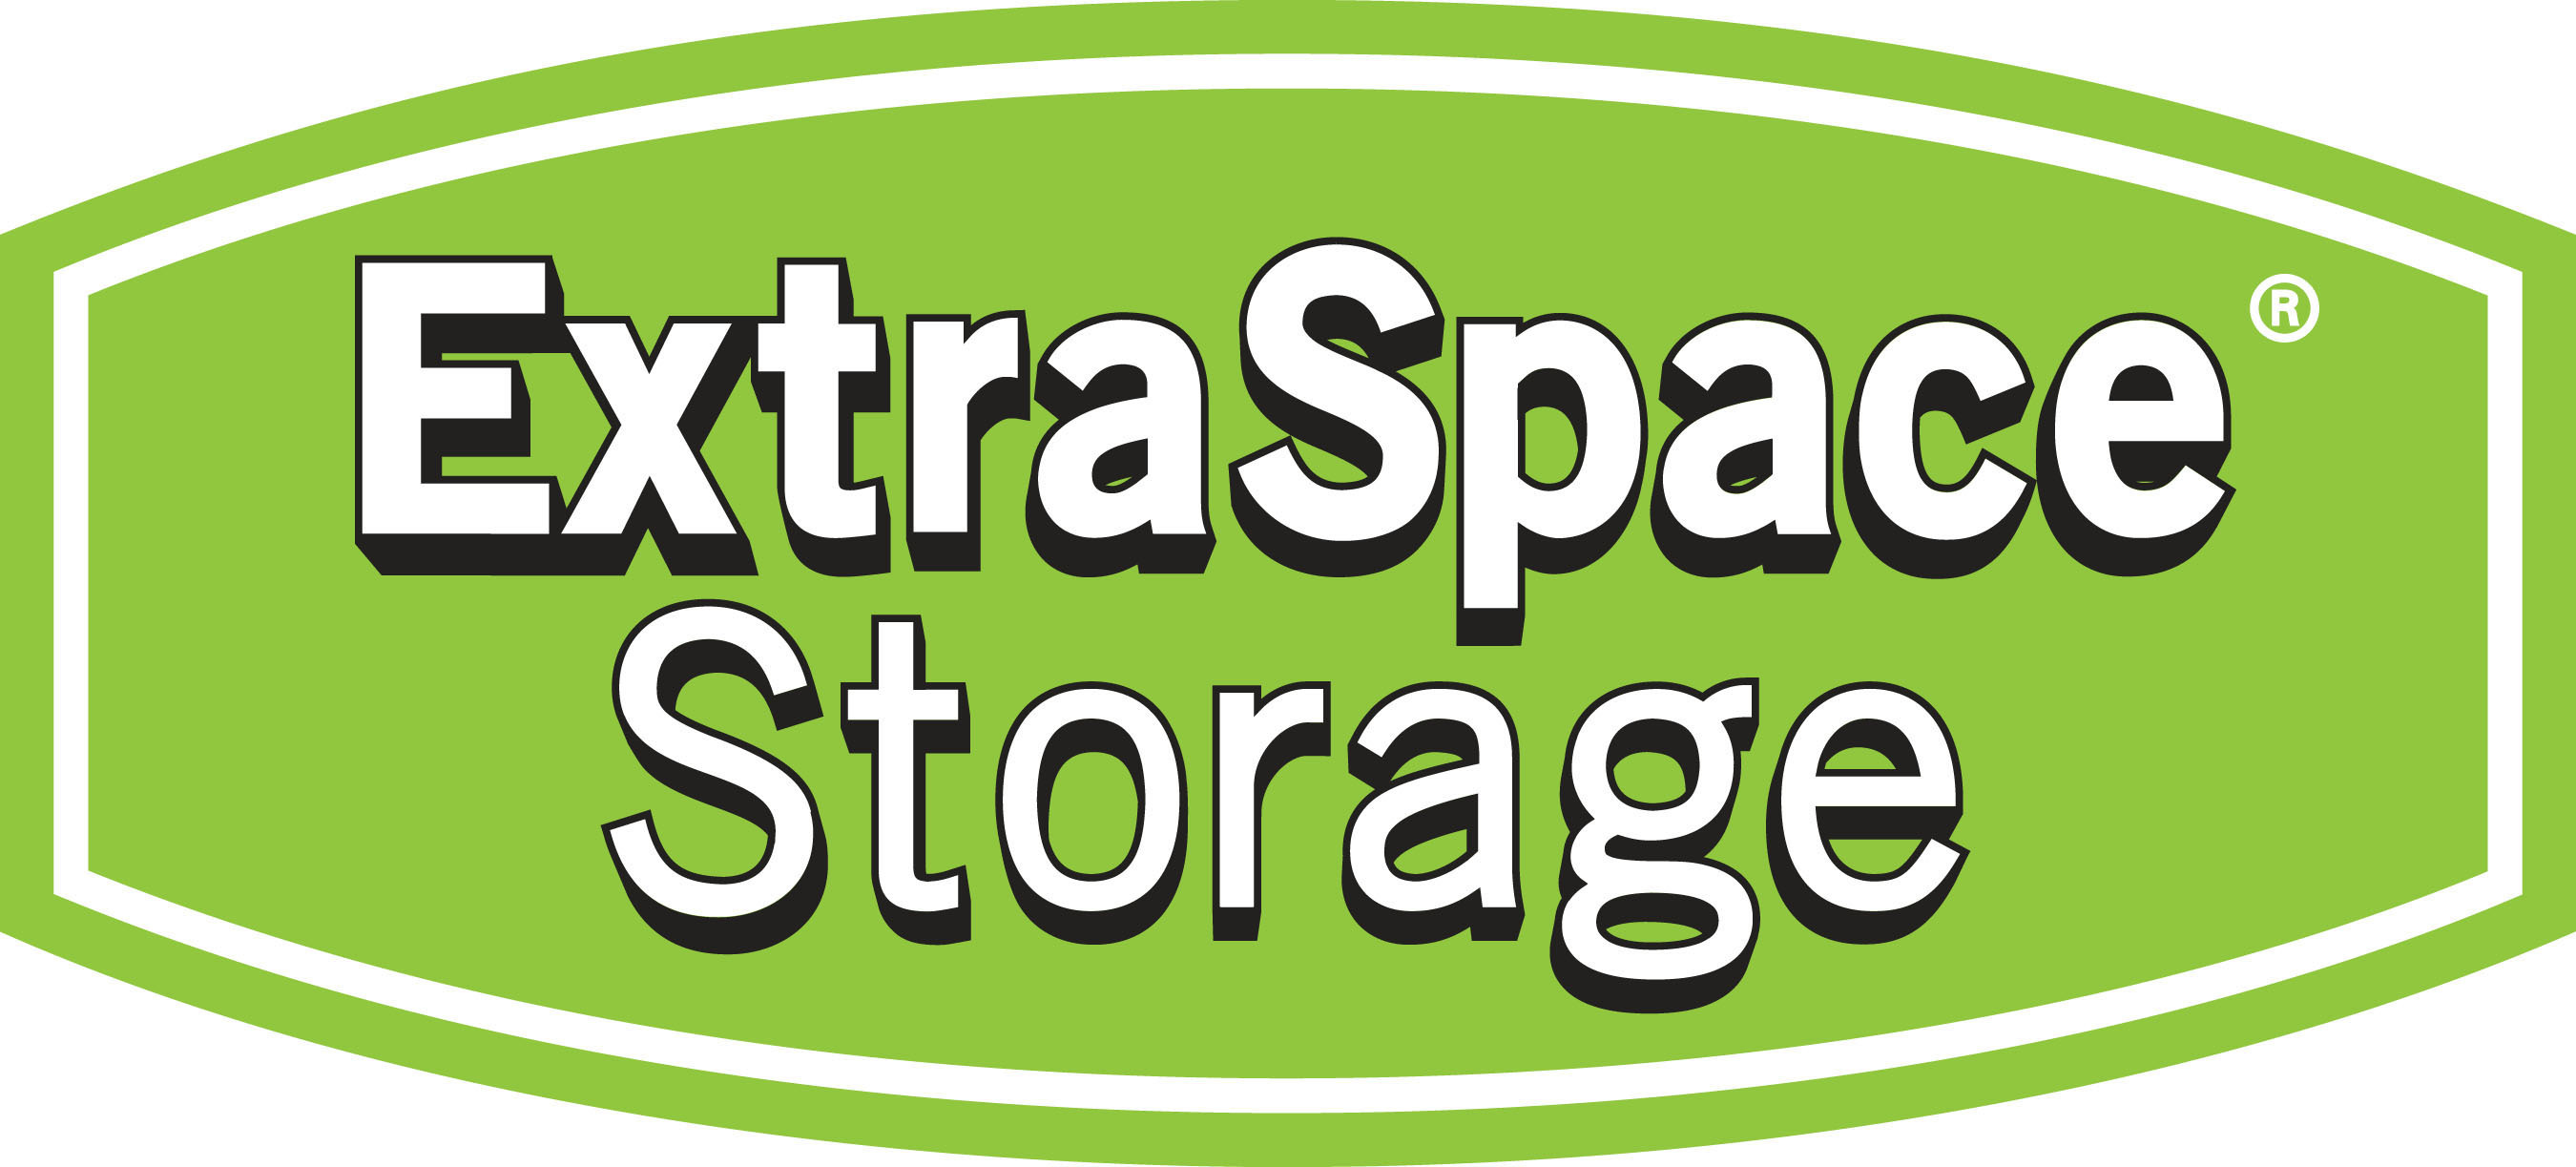 extra storage space inc self exr logo reit spring ways brandi passante wars smartstop acquisition closes company kai hawaii declutter